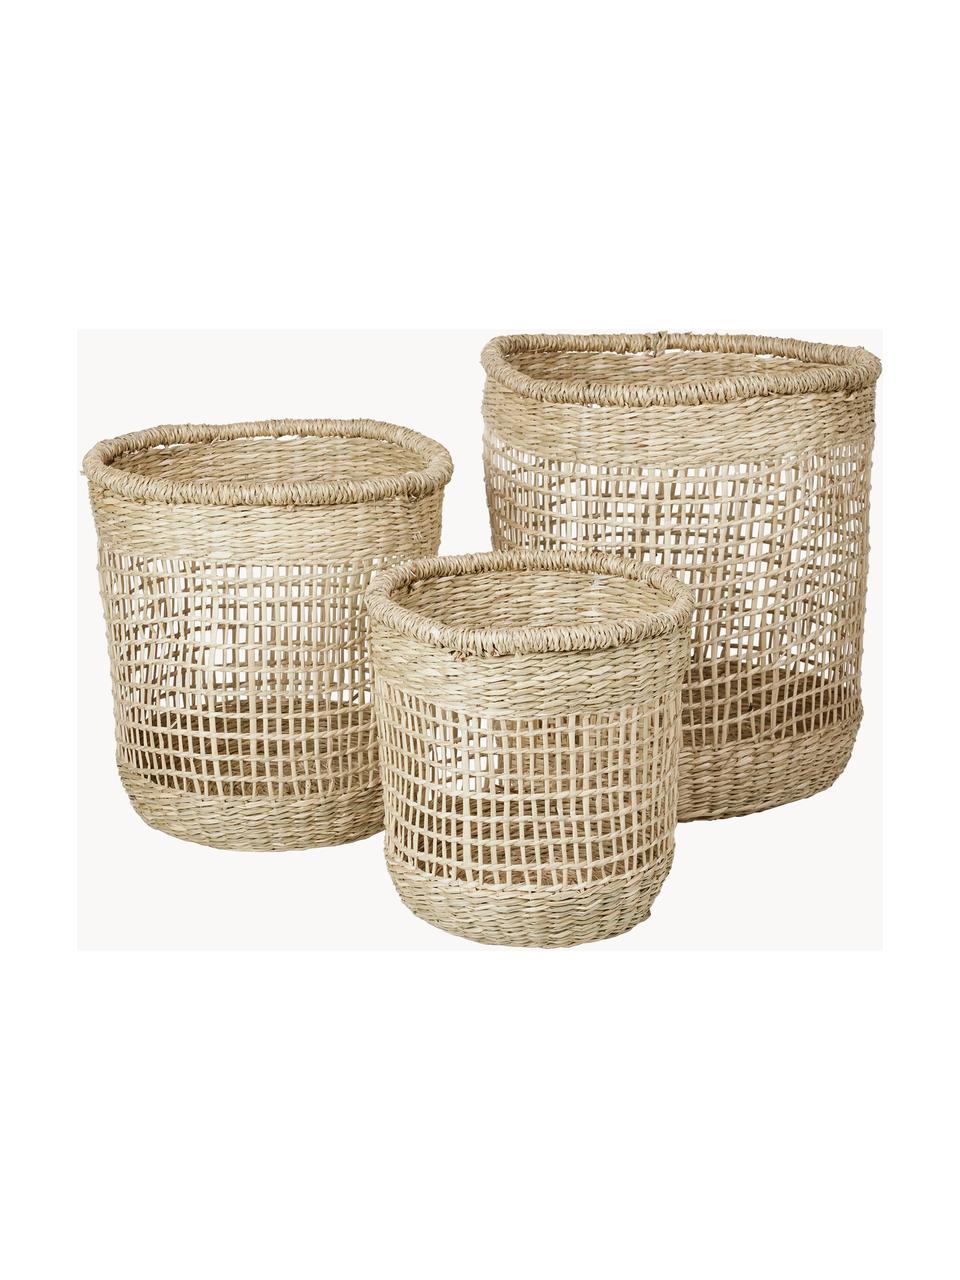 Set de cestas artesanales Zues, 3 uds., Seagrass, Beige, Set de diferentes tamaños